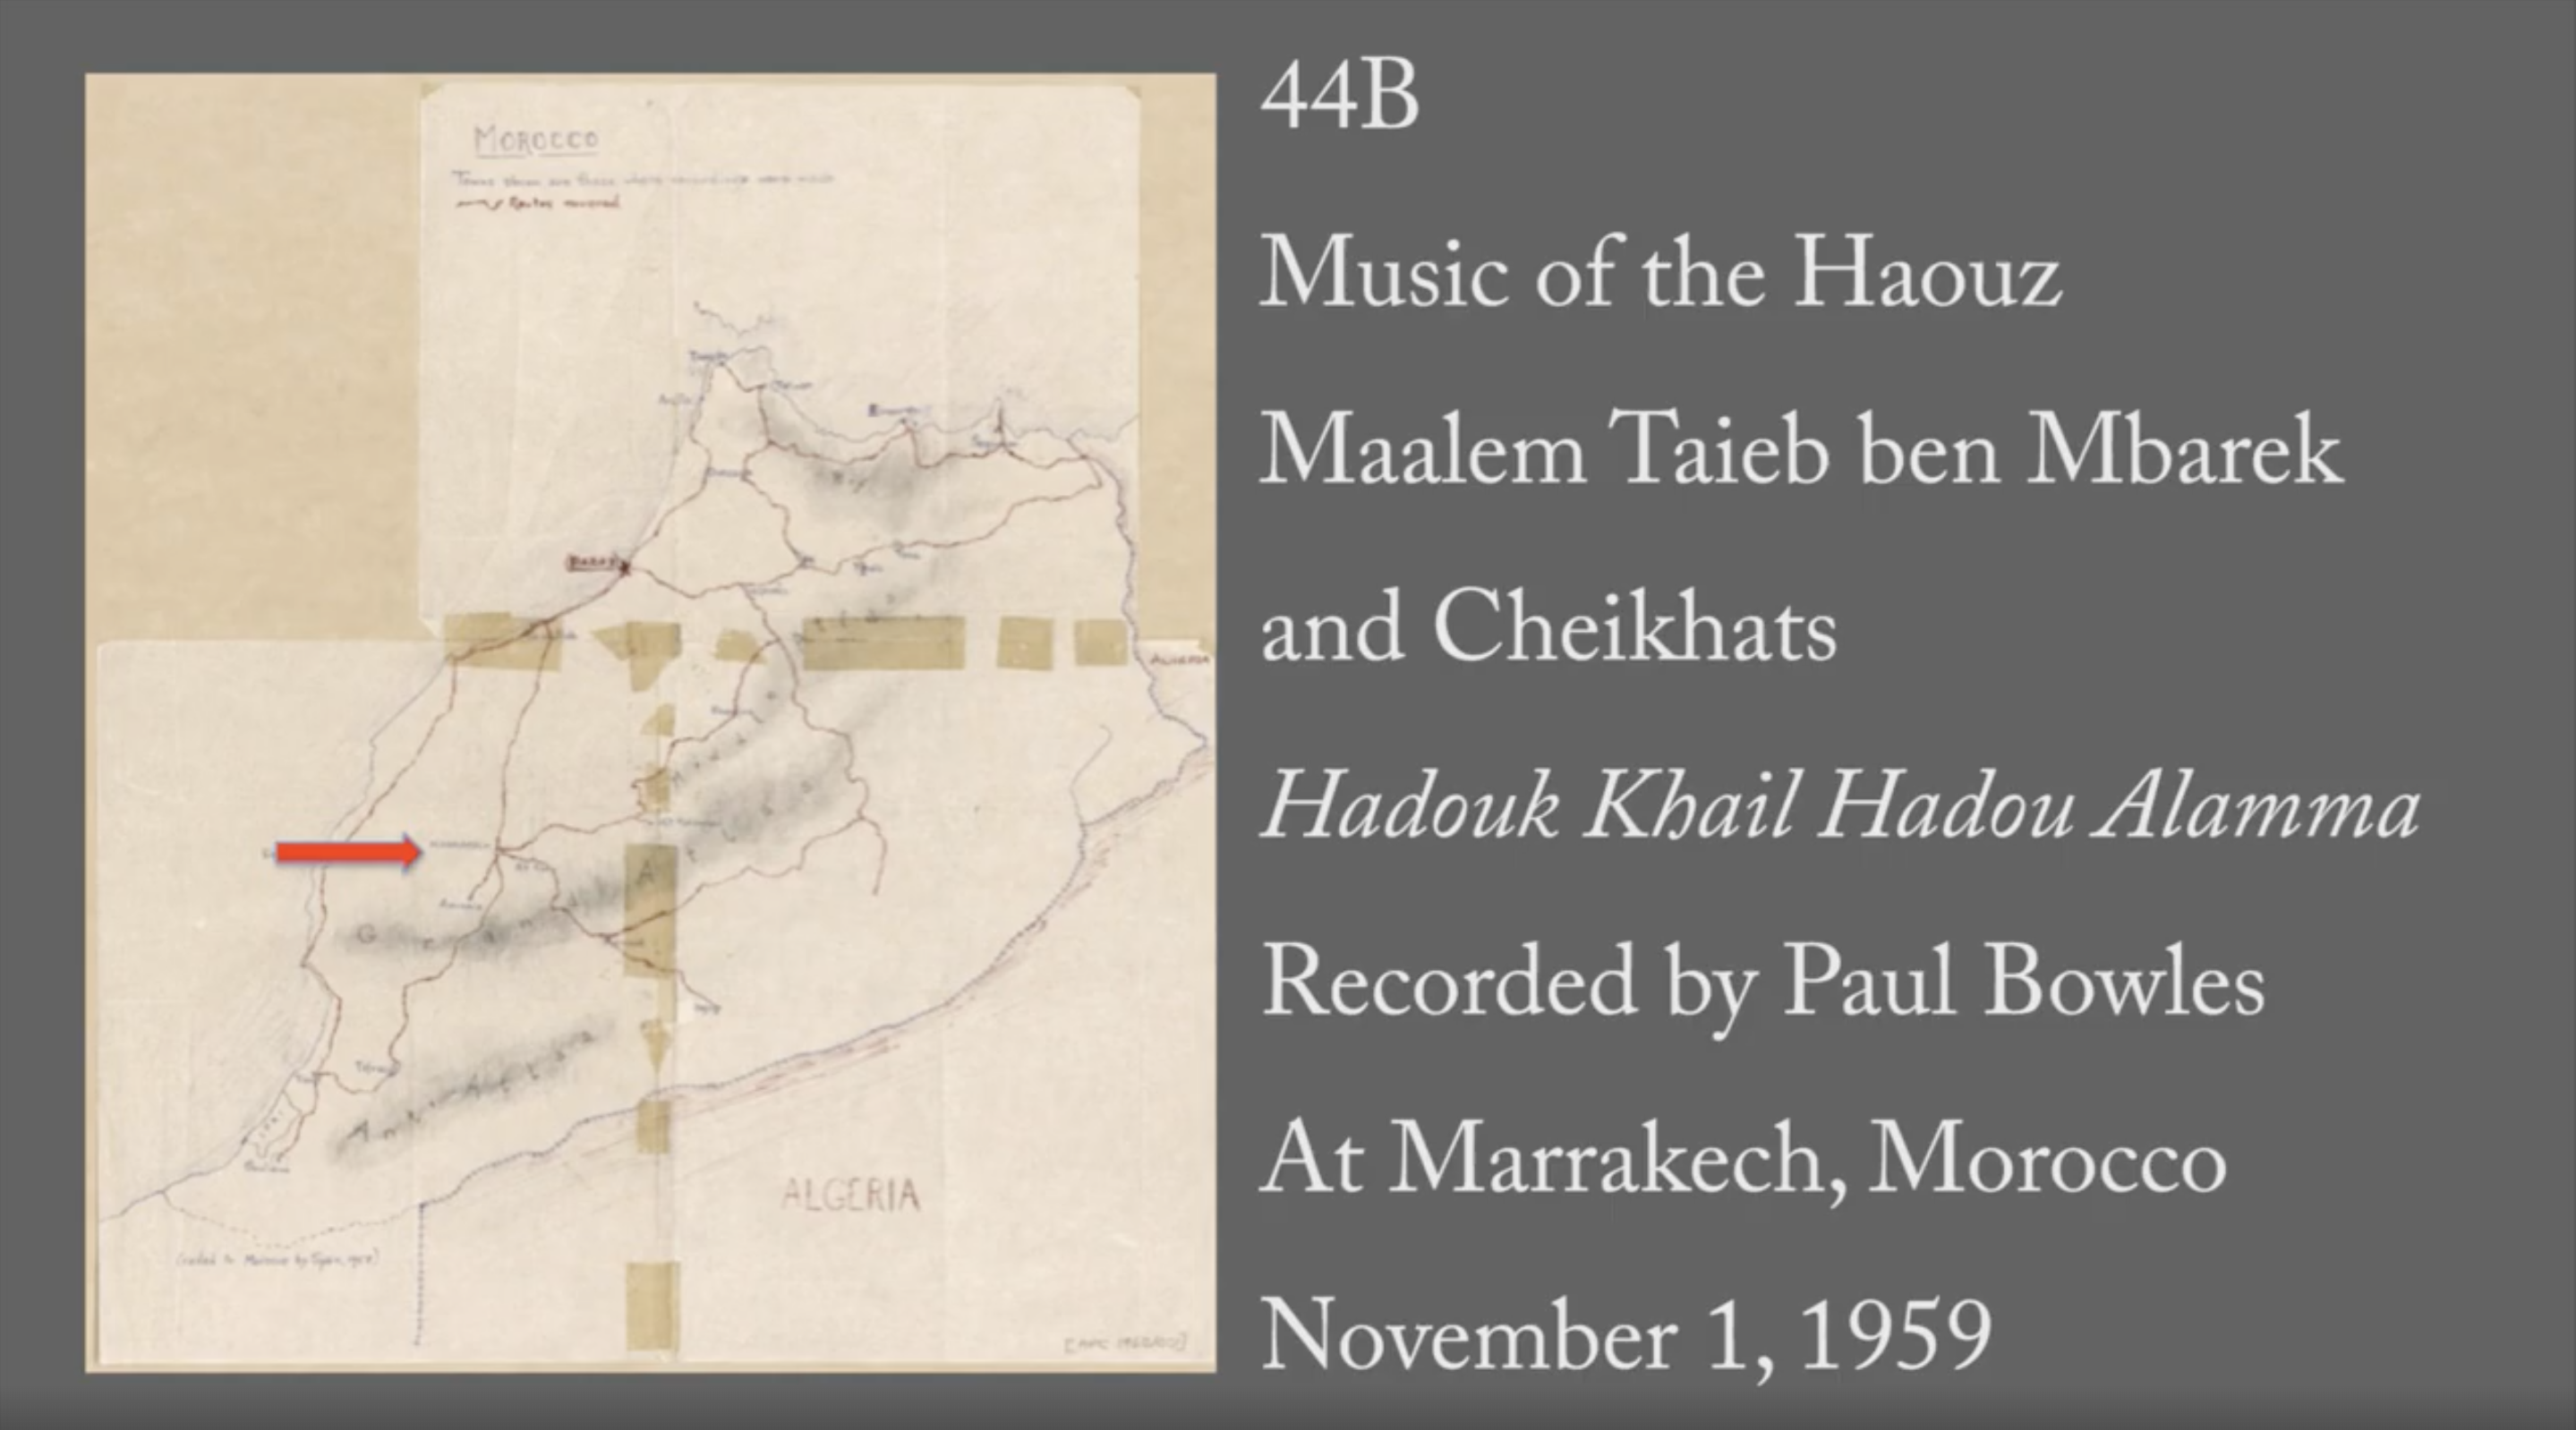  Maalem Taieb ben Mbarek - 44B: "Hadouk Khail Hadou Alamma" (Music of the Haouz)